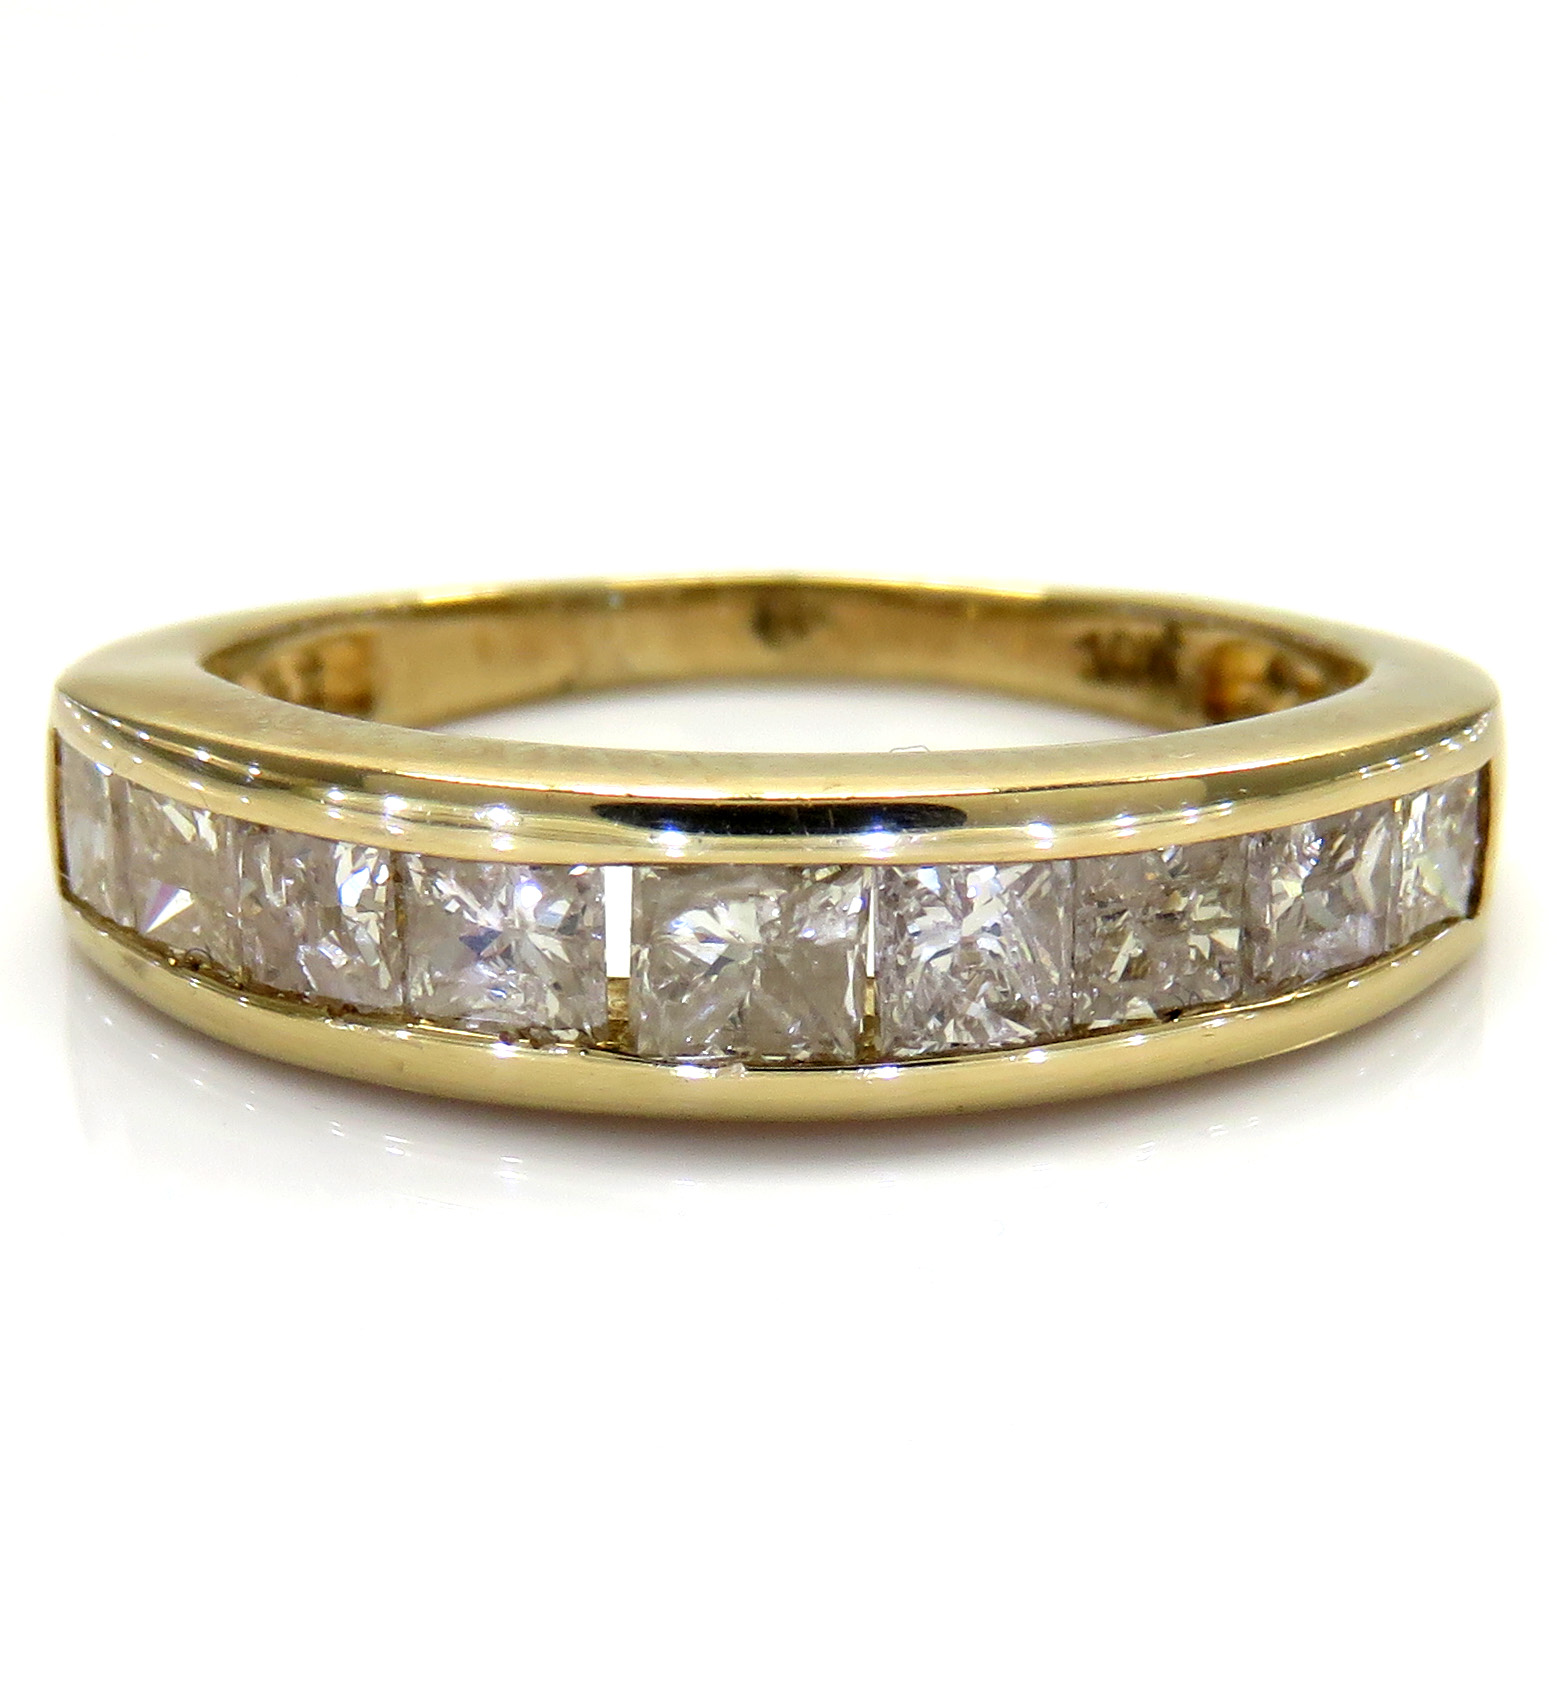 10k yellow gold princess diamond wedding band ring 1.00ct